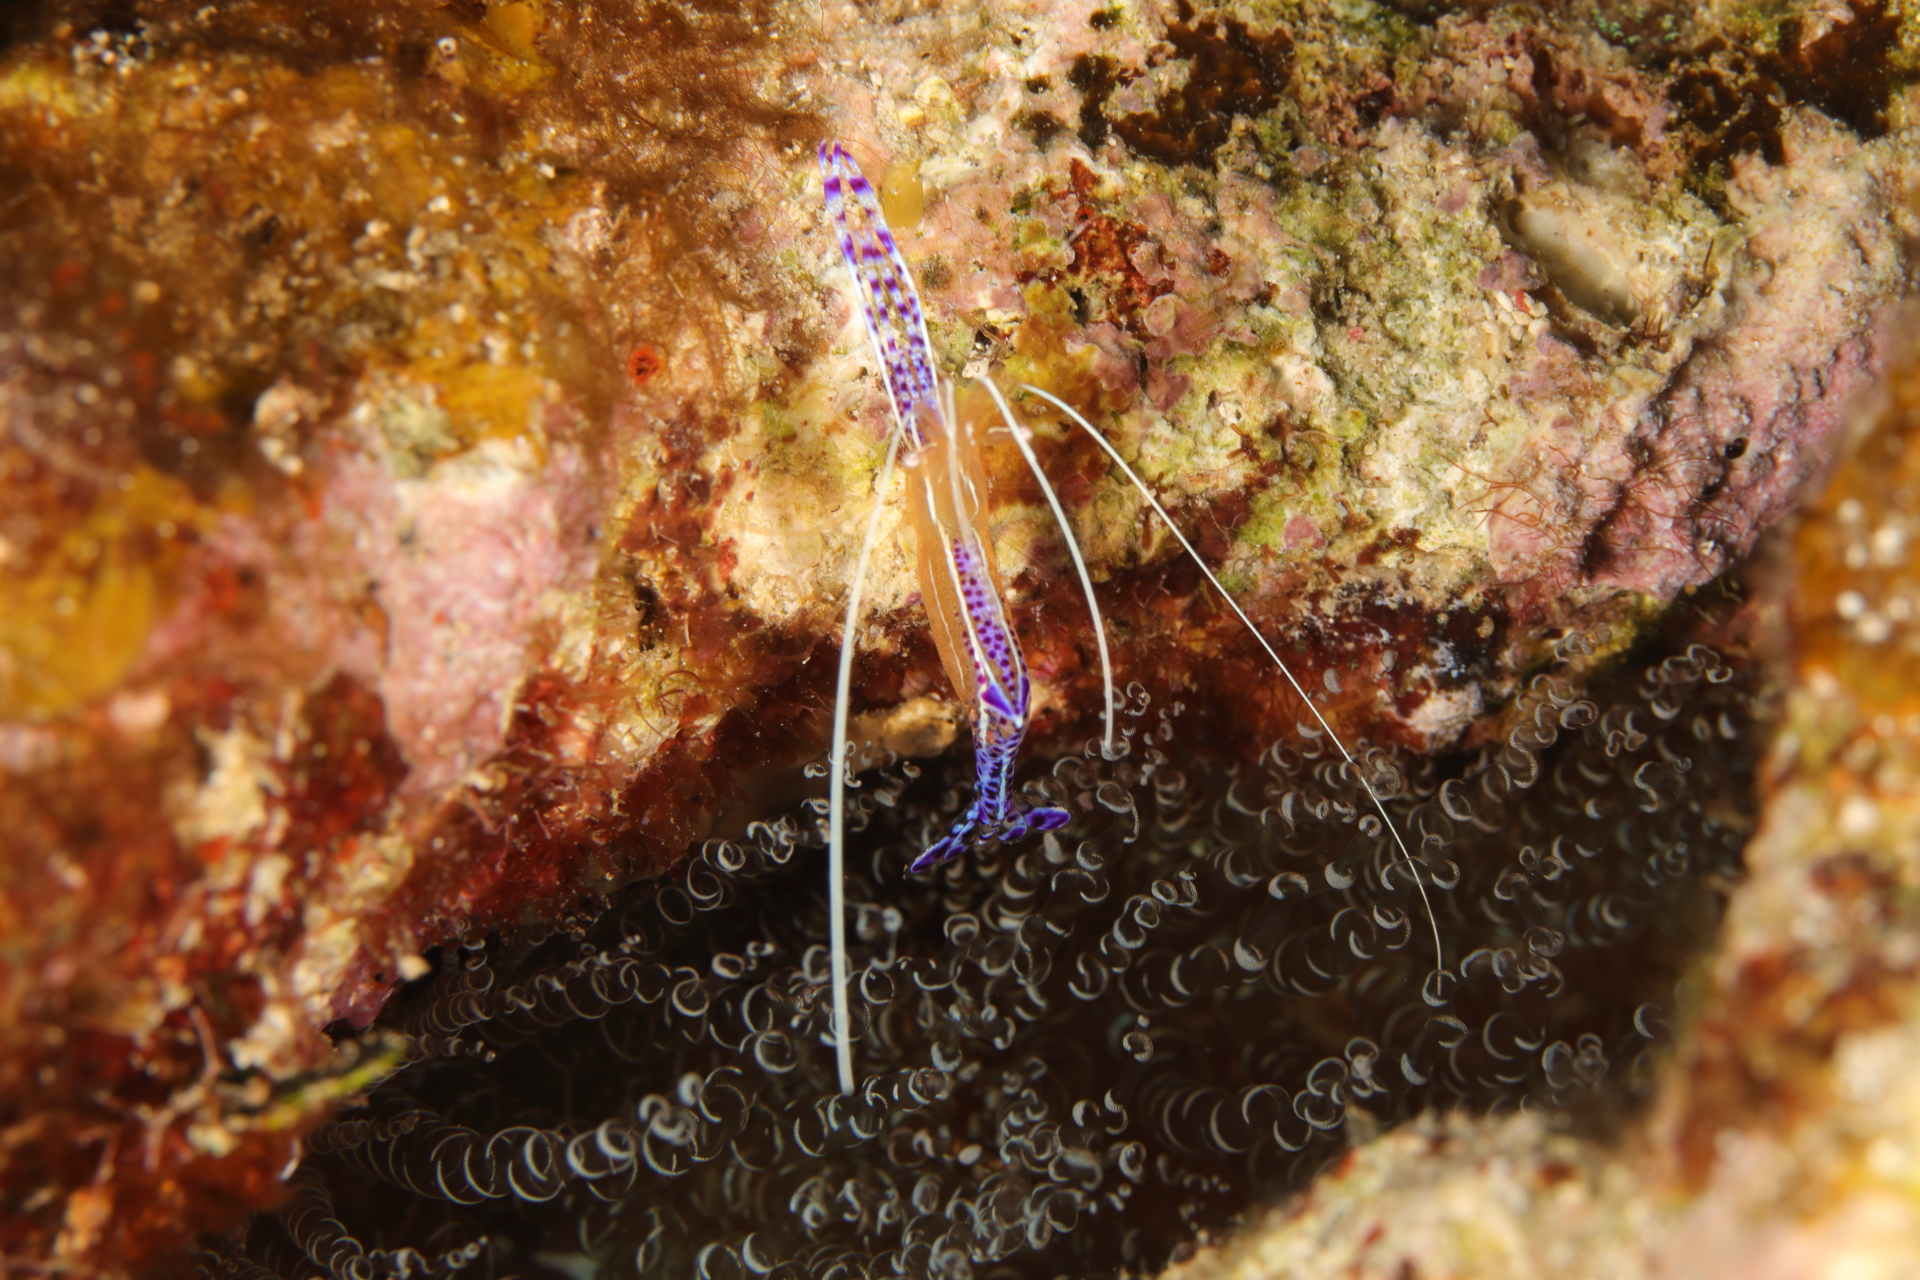 Pederson Cleaner Shrimp (Jul 1, 2022)